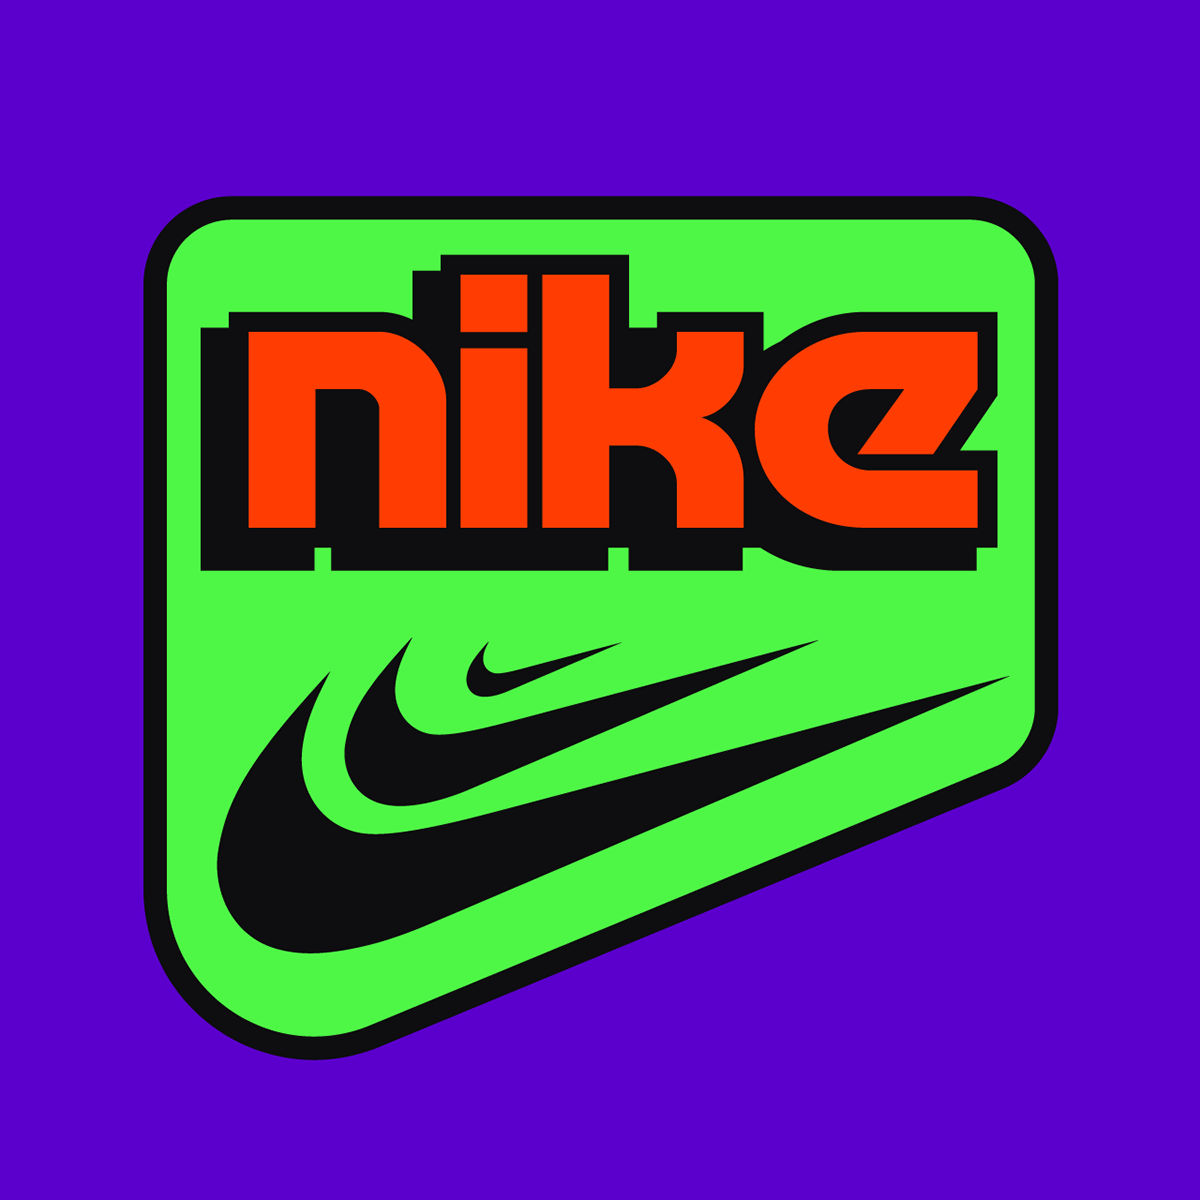 ikea Nike pepsi google adidas Netflix spotify patagonia oreo nyc